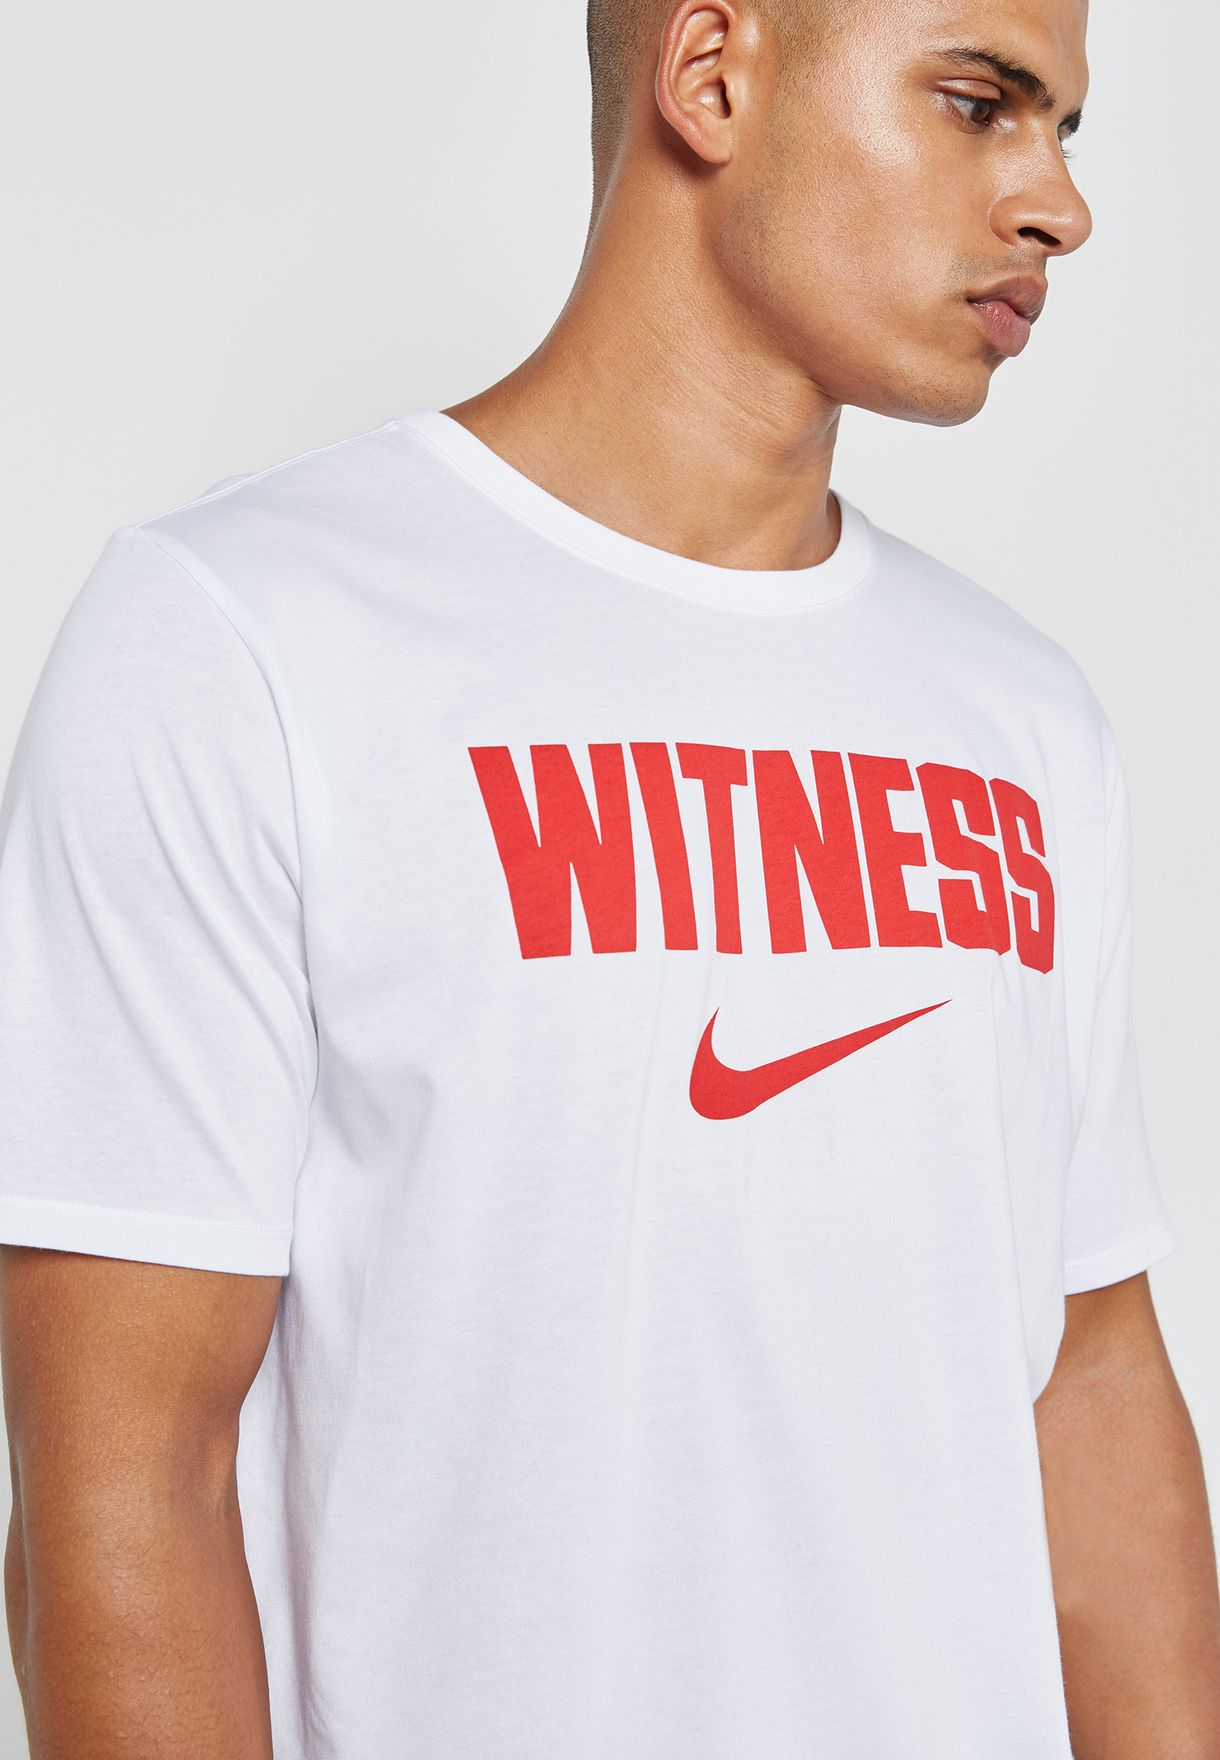 nike witness t shirt